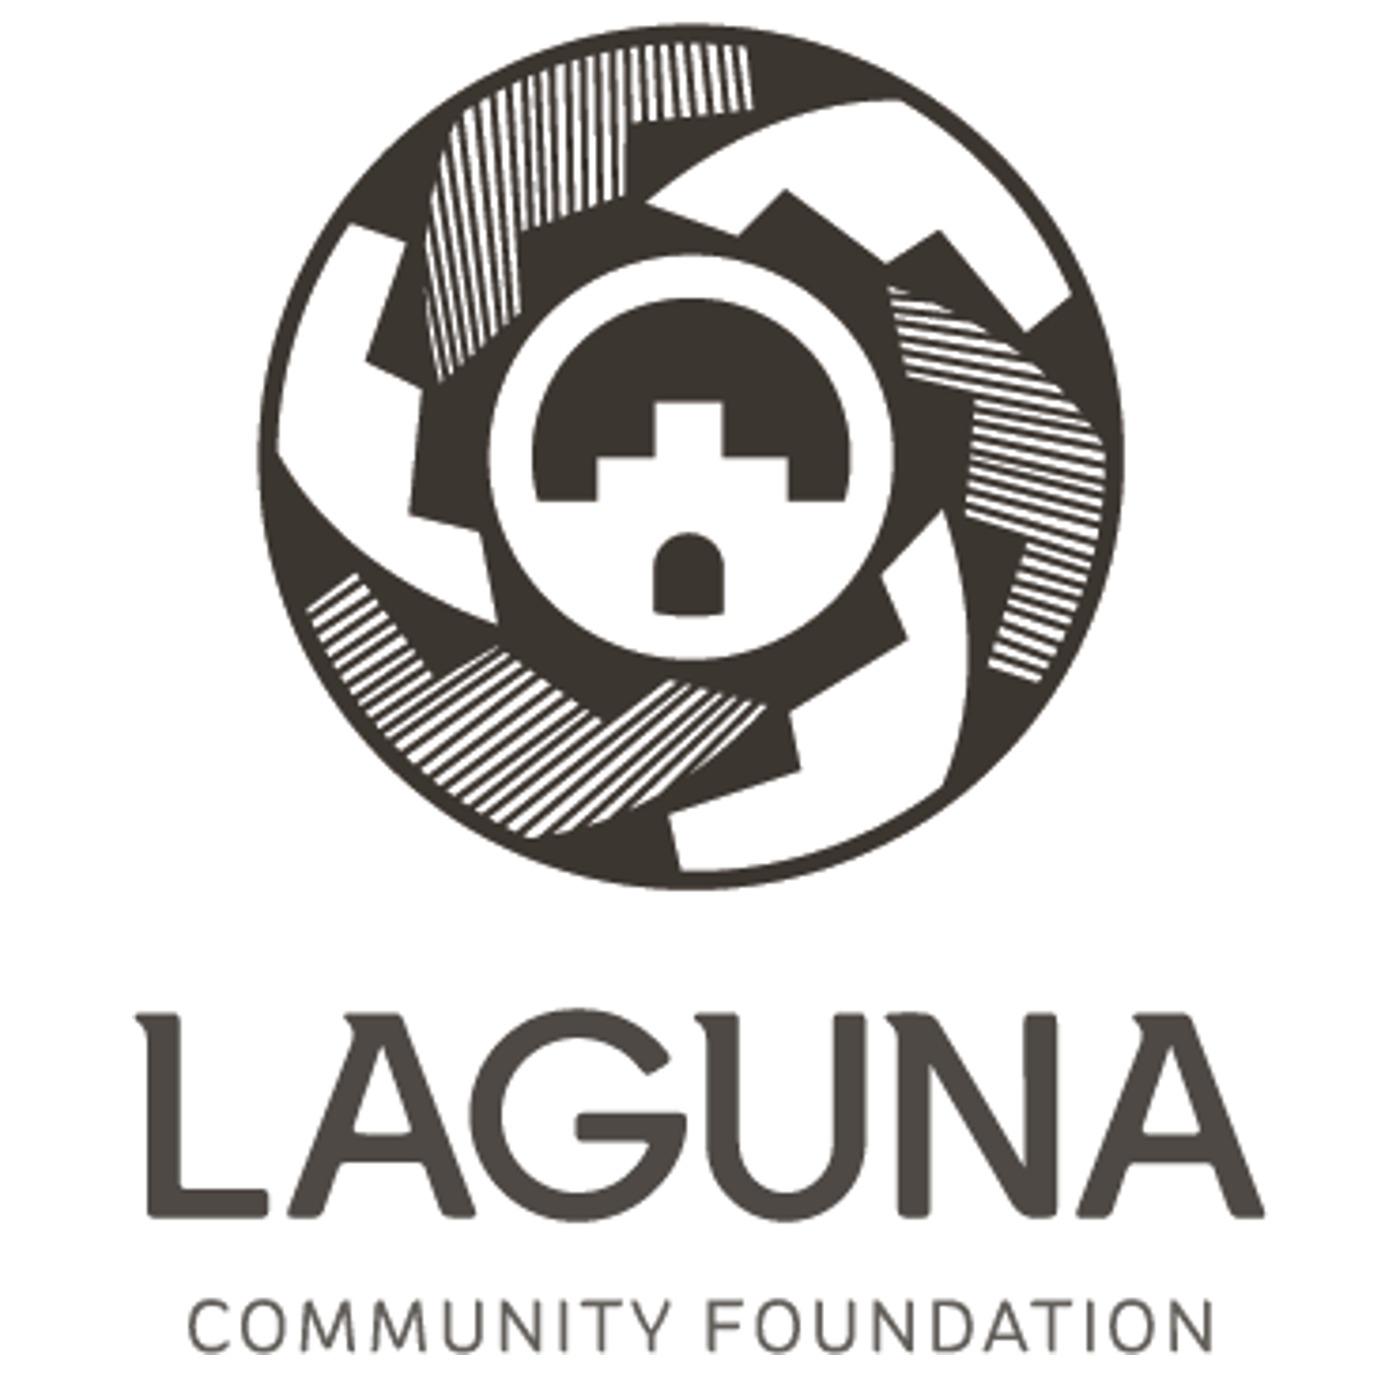 Laguna Community Foundation